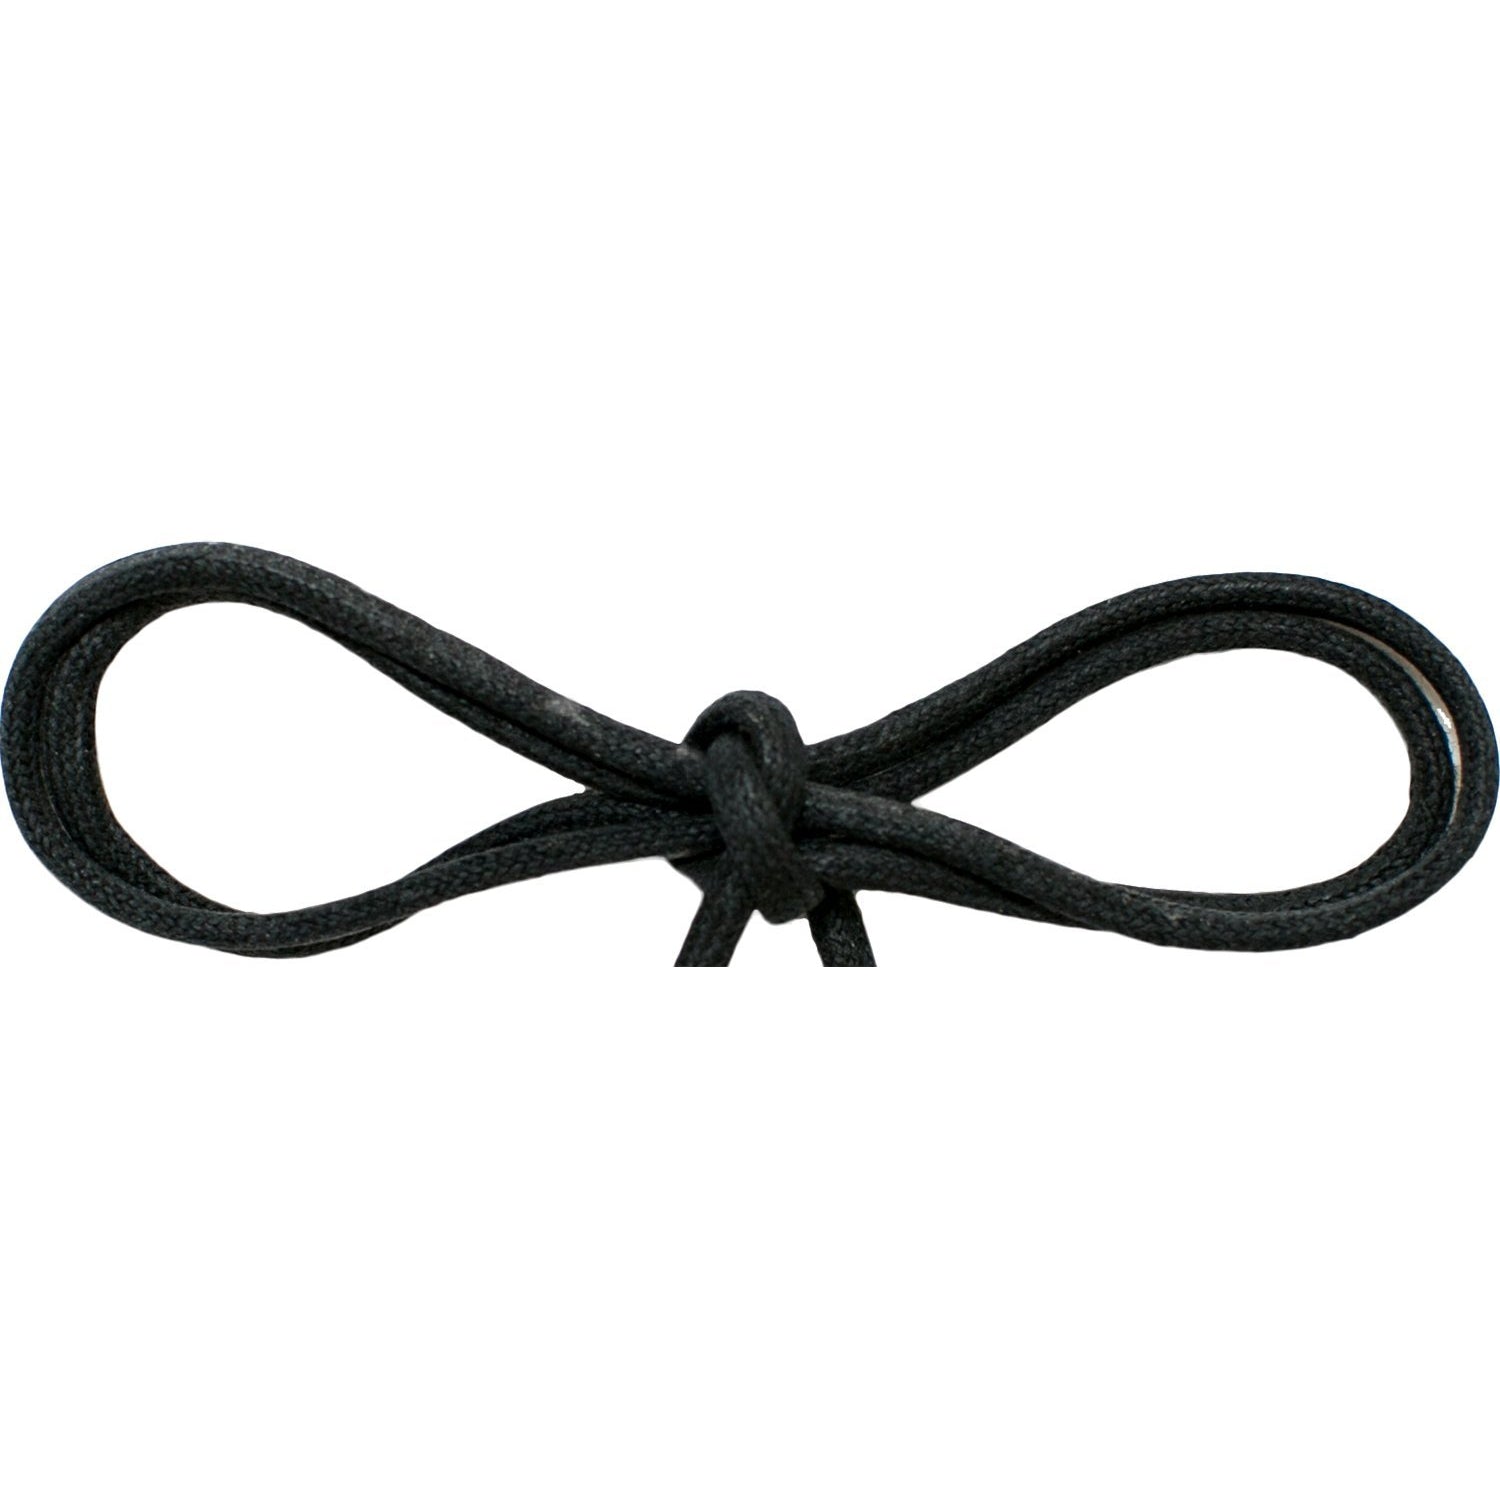 Wholesale Waxed Cotton Thin Round DRESS Laces 1/8'' - Black (12 Pair Pack) Shoelaces